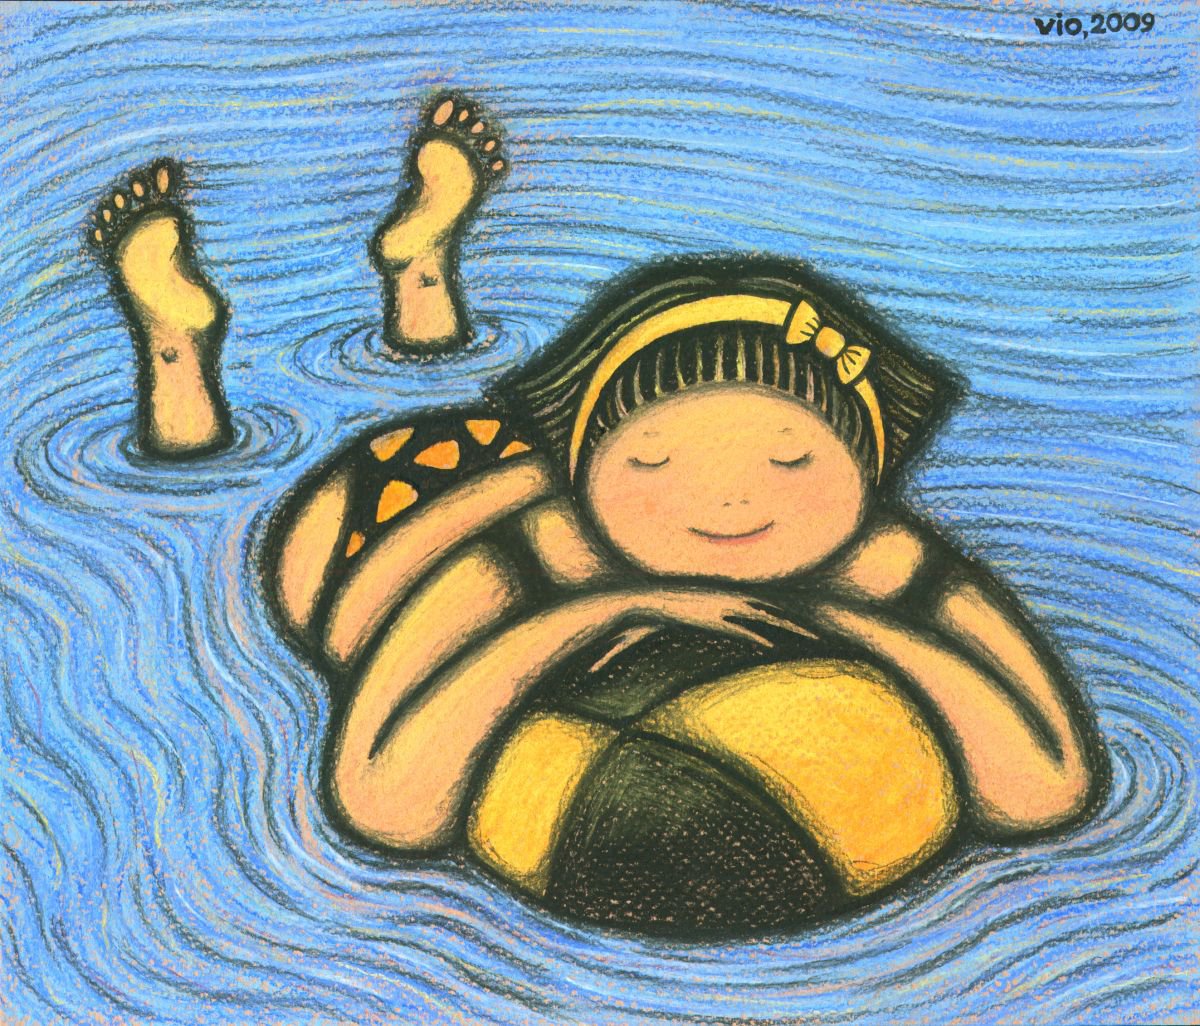 Swimming by Vio Valova